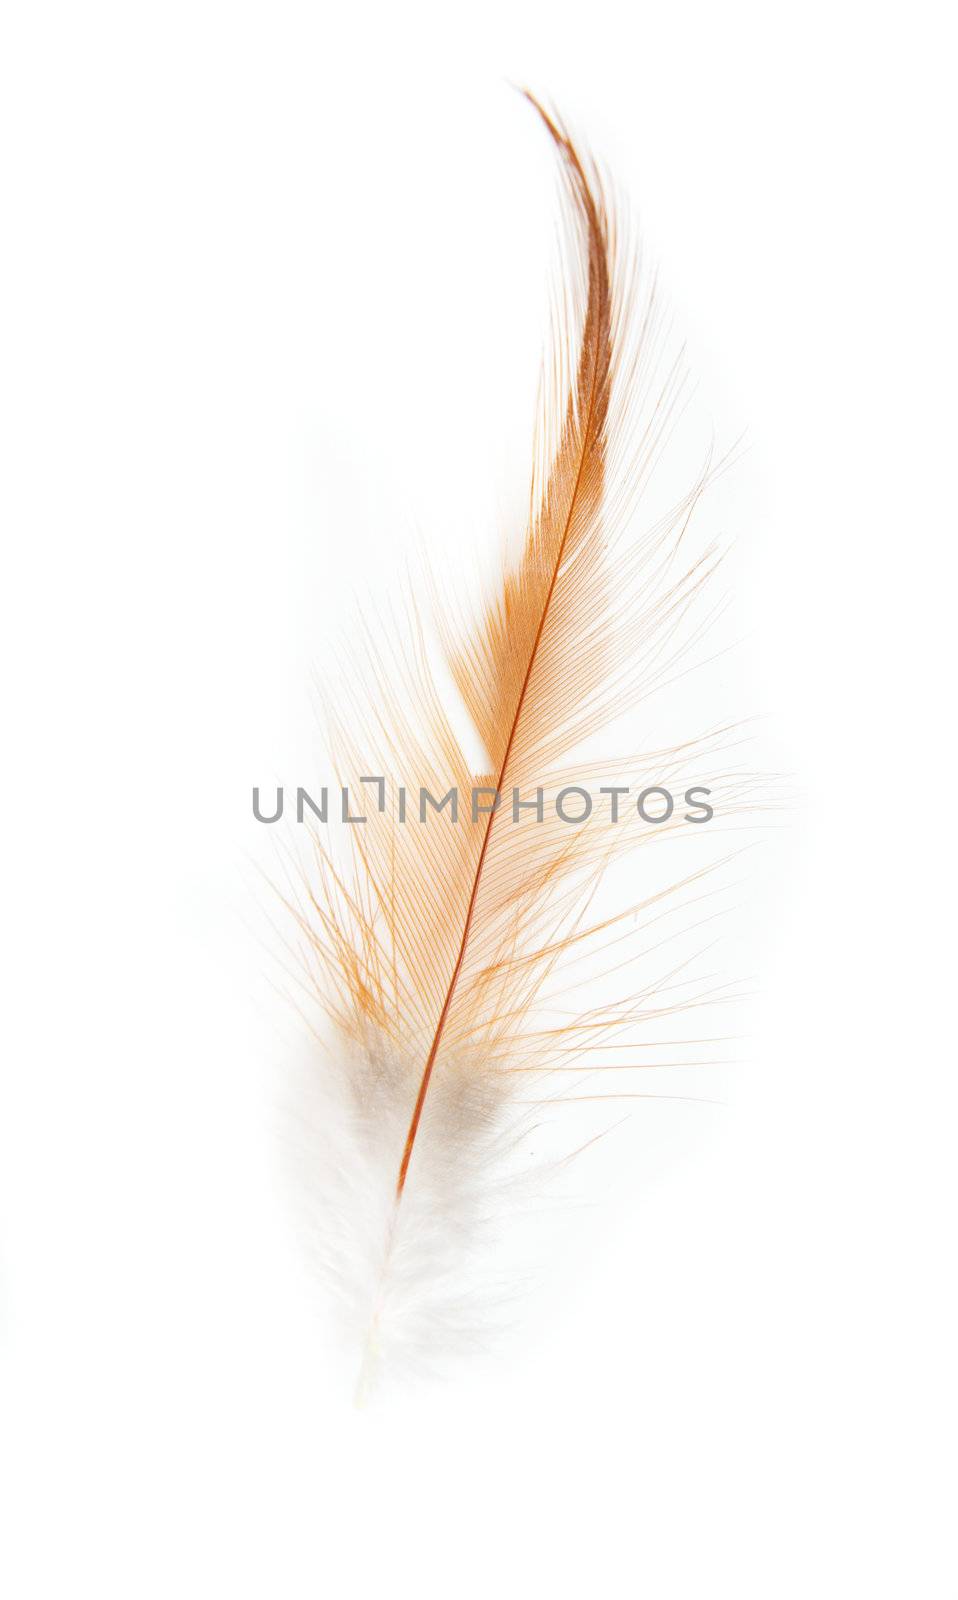 orange feathers on a white background by schankz